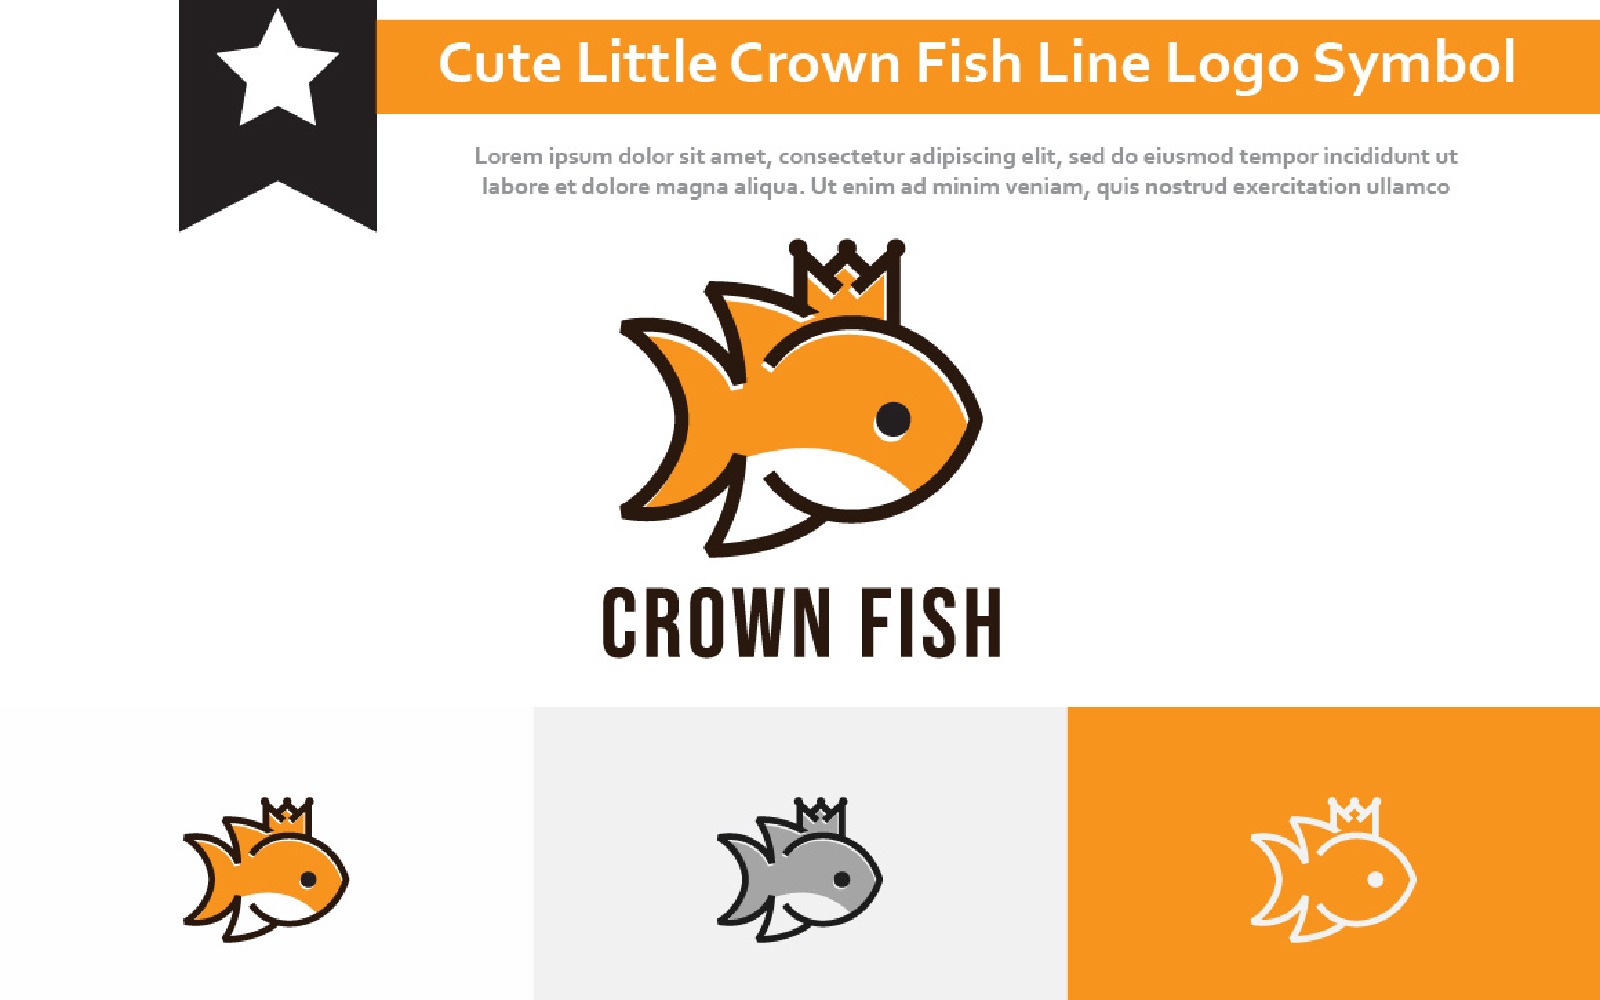 Cute Little Crown Fish Line Logo Symbol